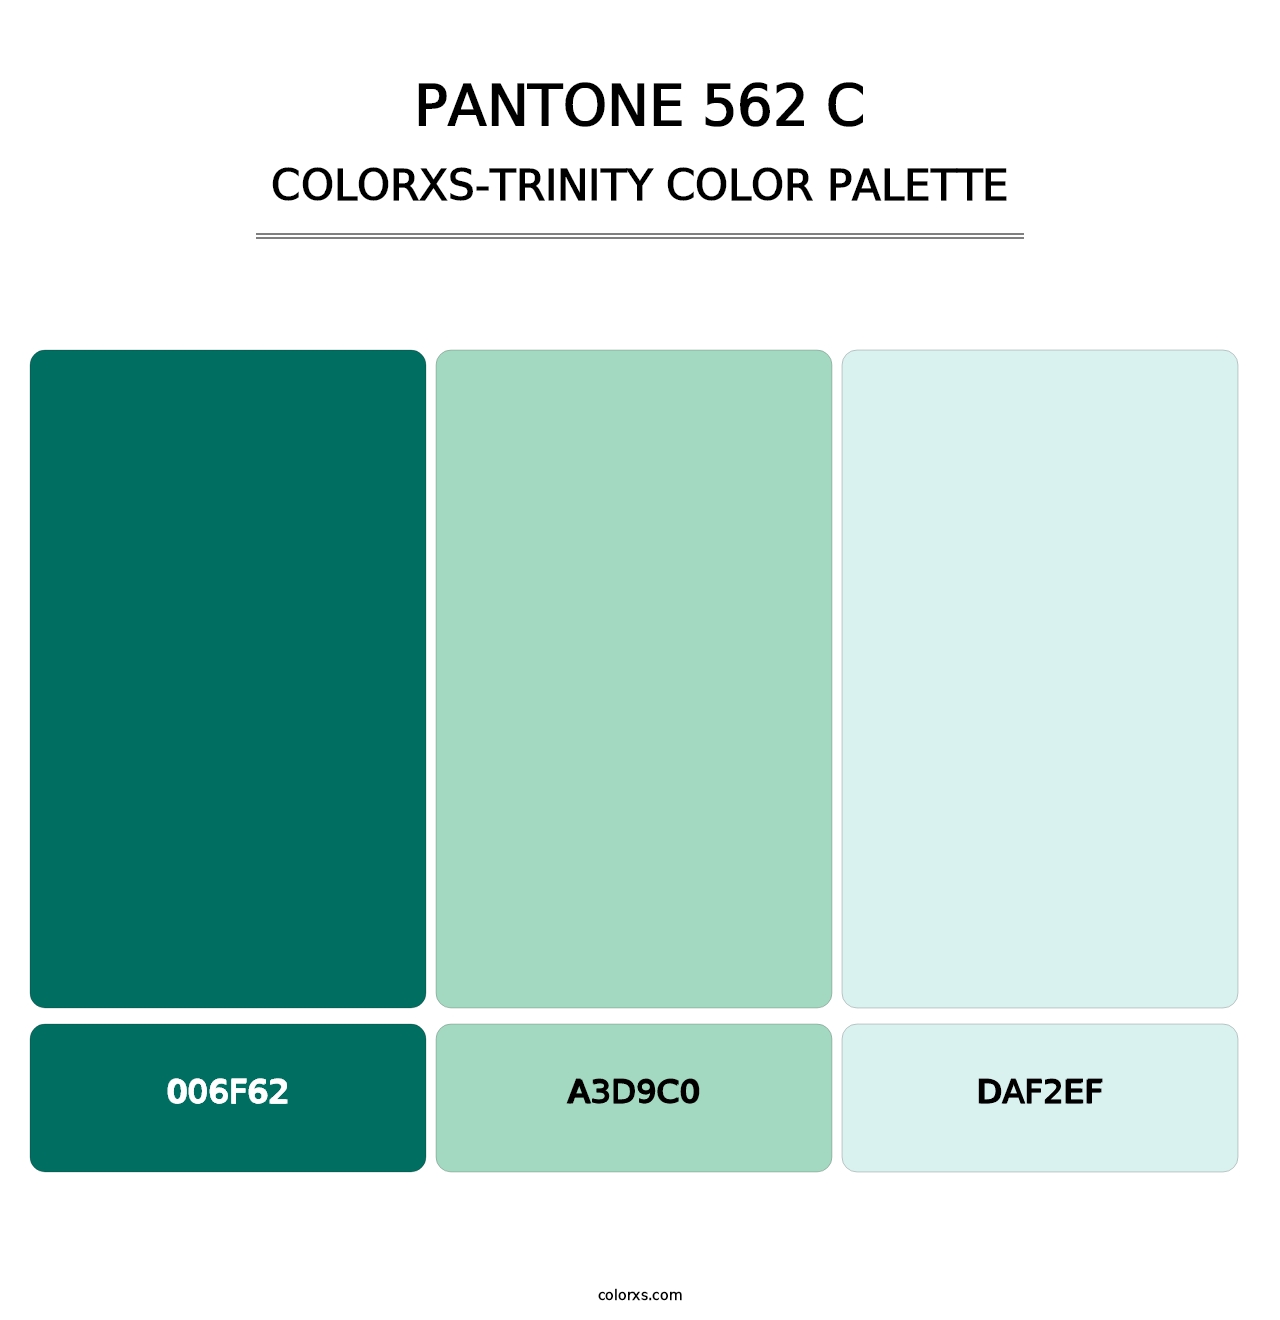 PANTONE 562 C - Colorxs Trinity Palette